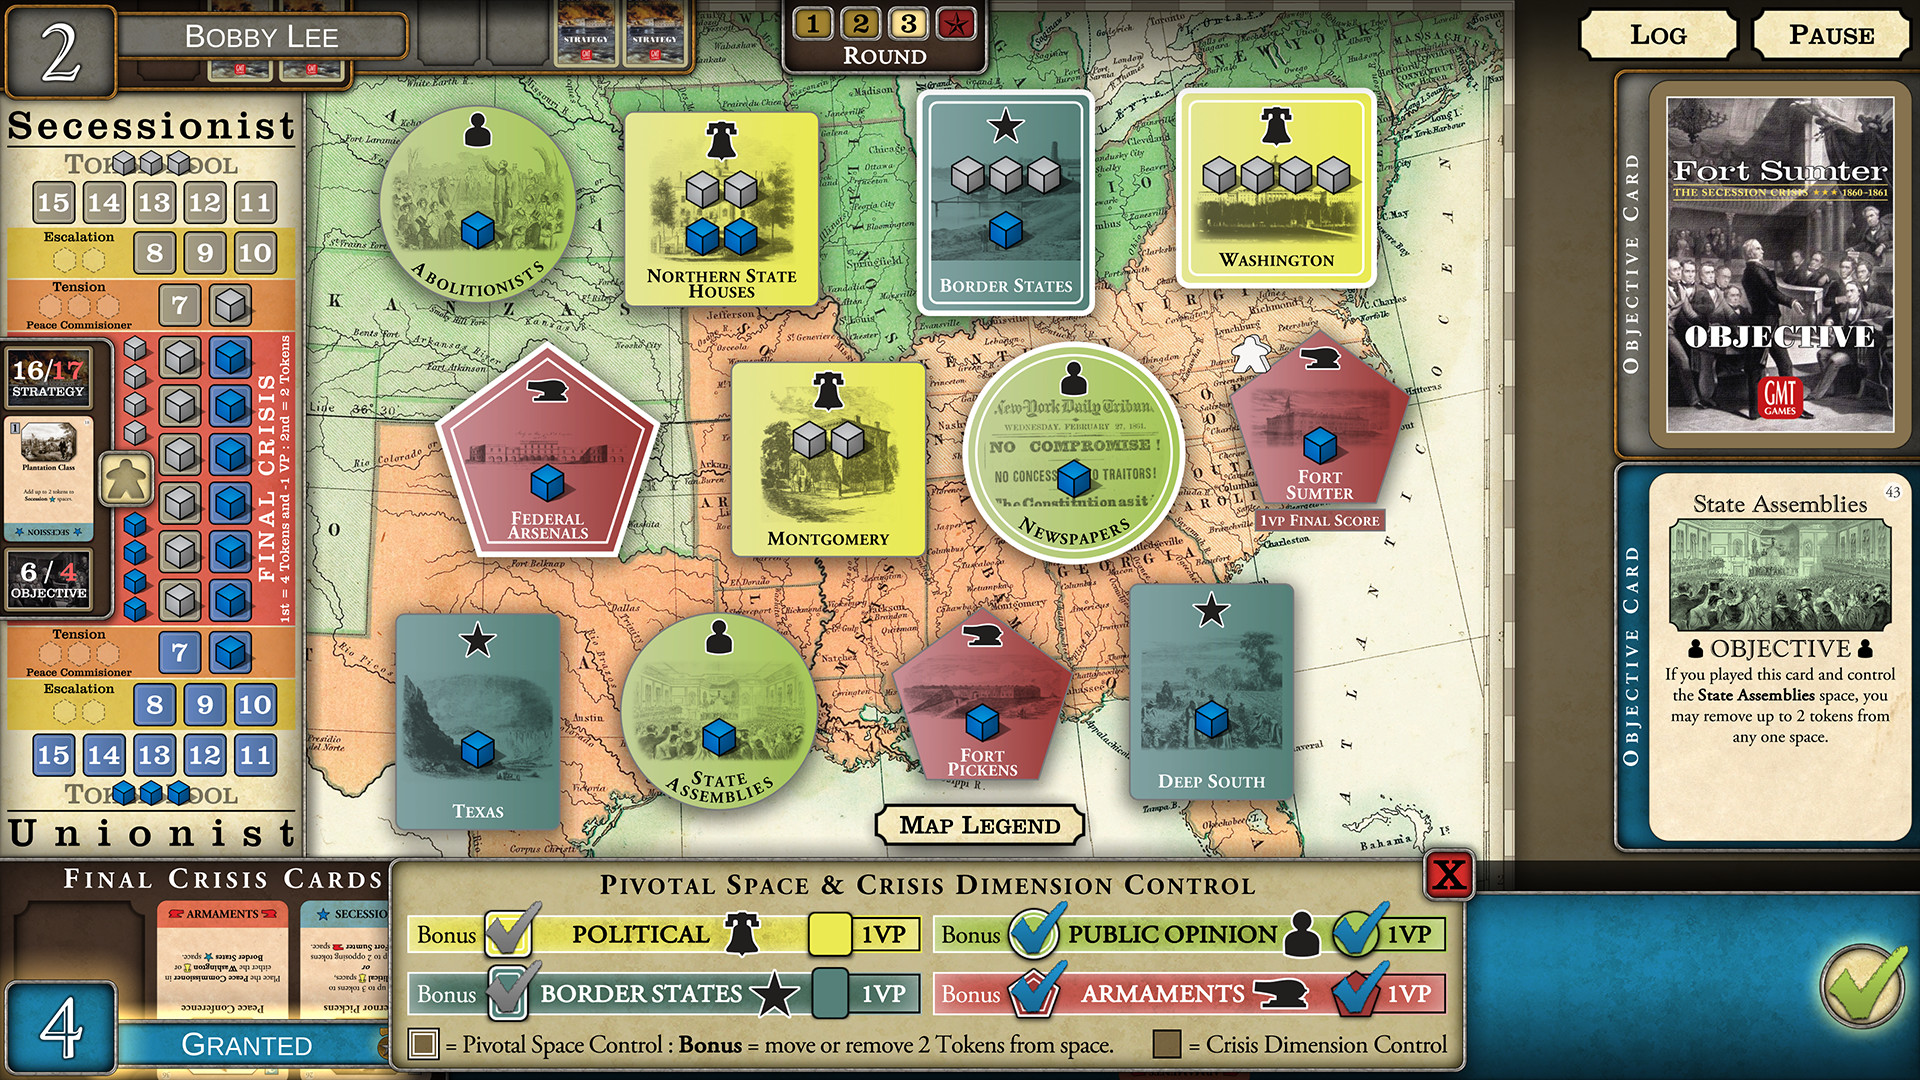 Papan game Fort Sumter